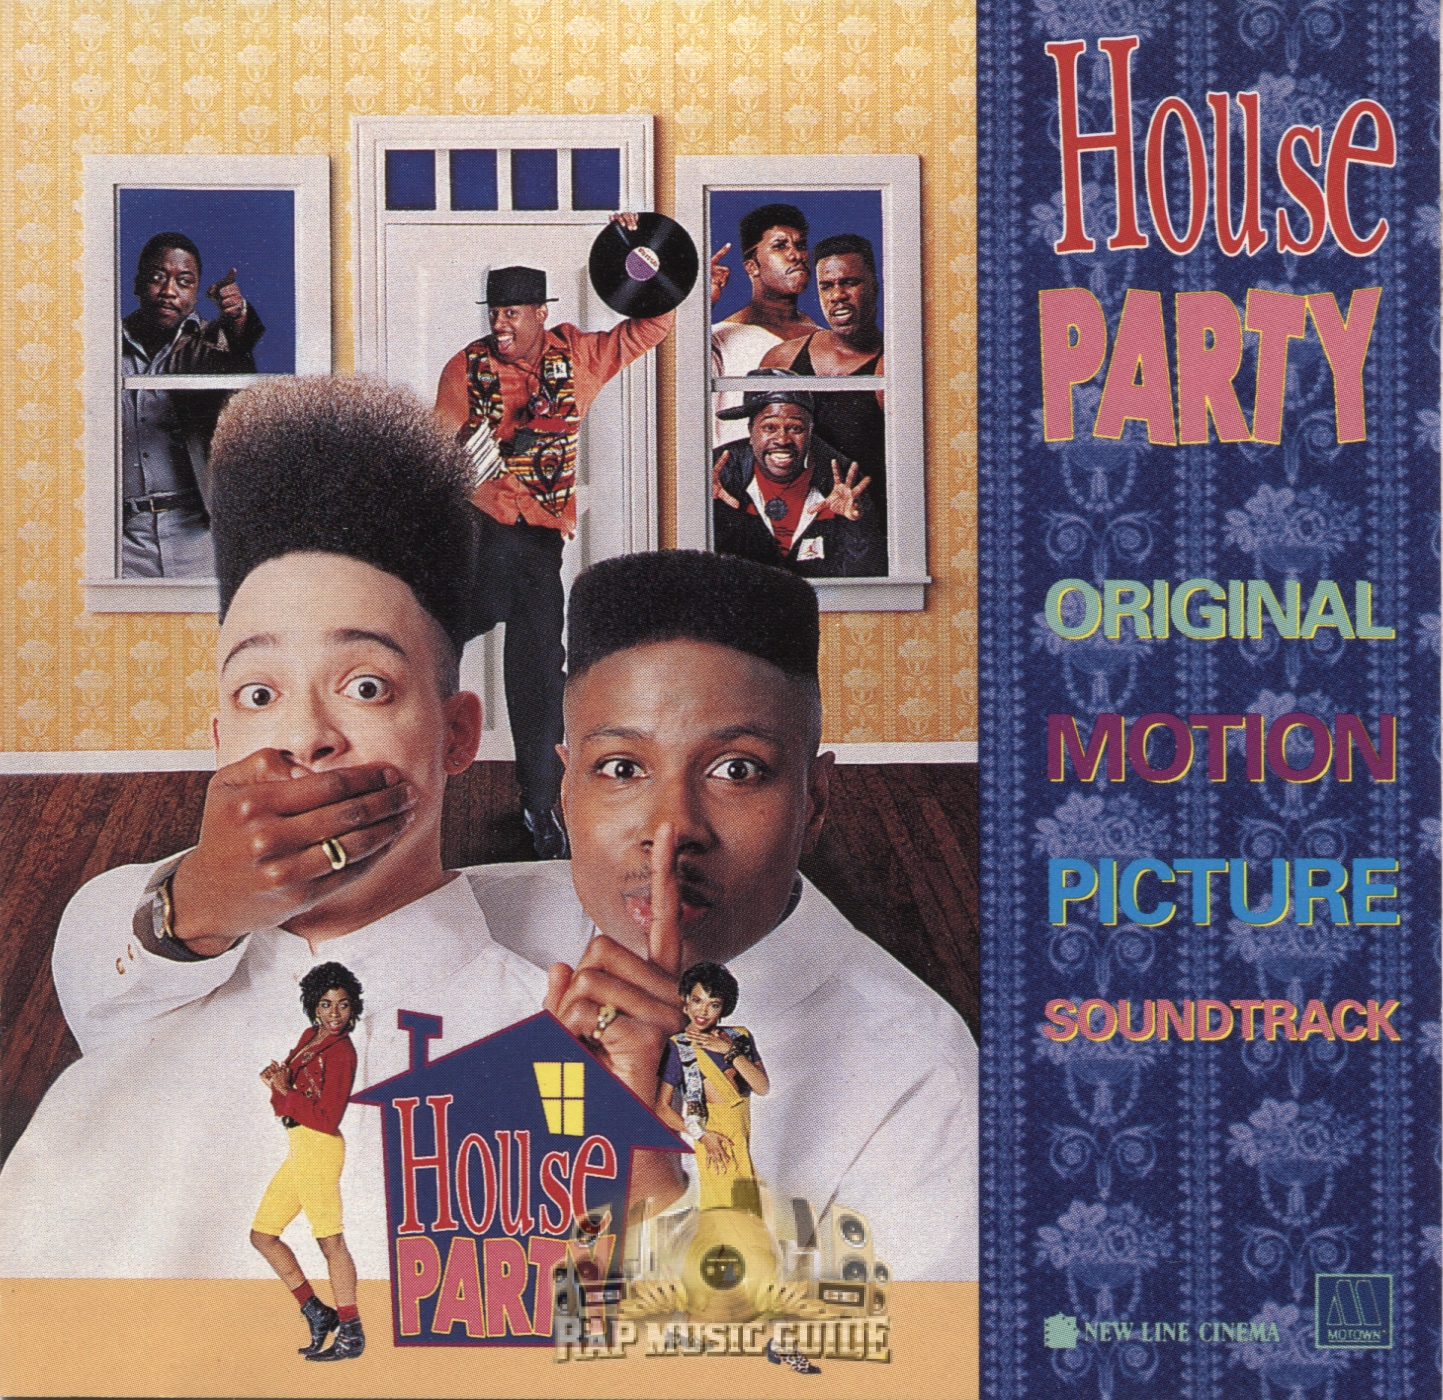 House Party. OST House. LP last, James: Voodoo-Party. LP Party. House soundtracks